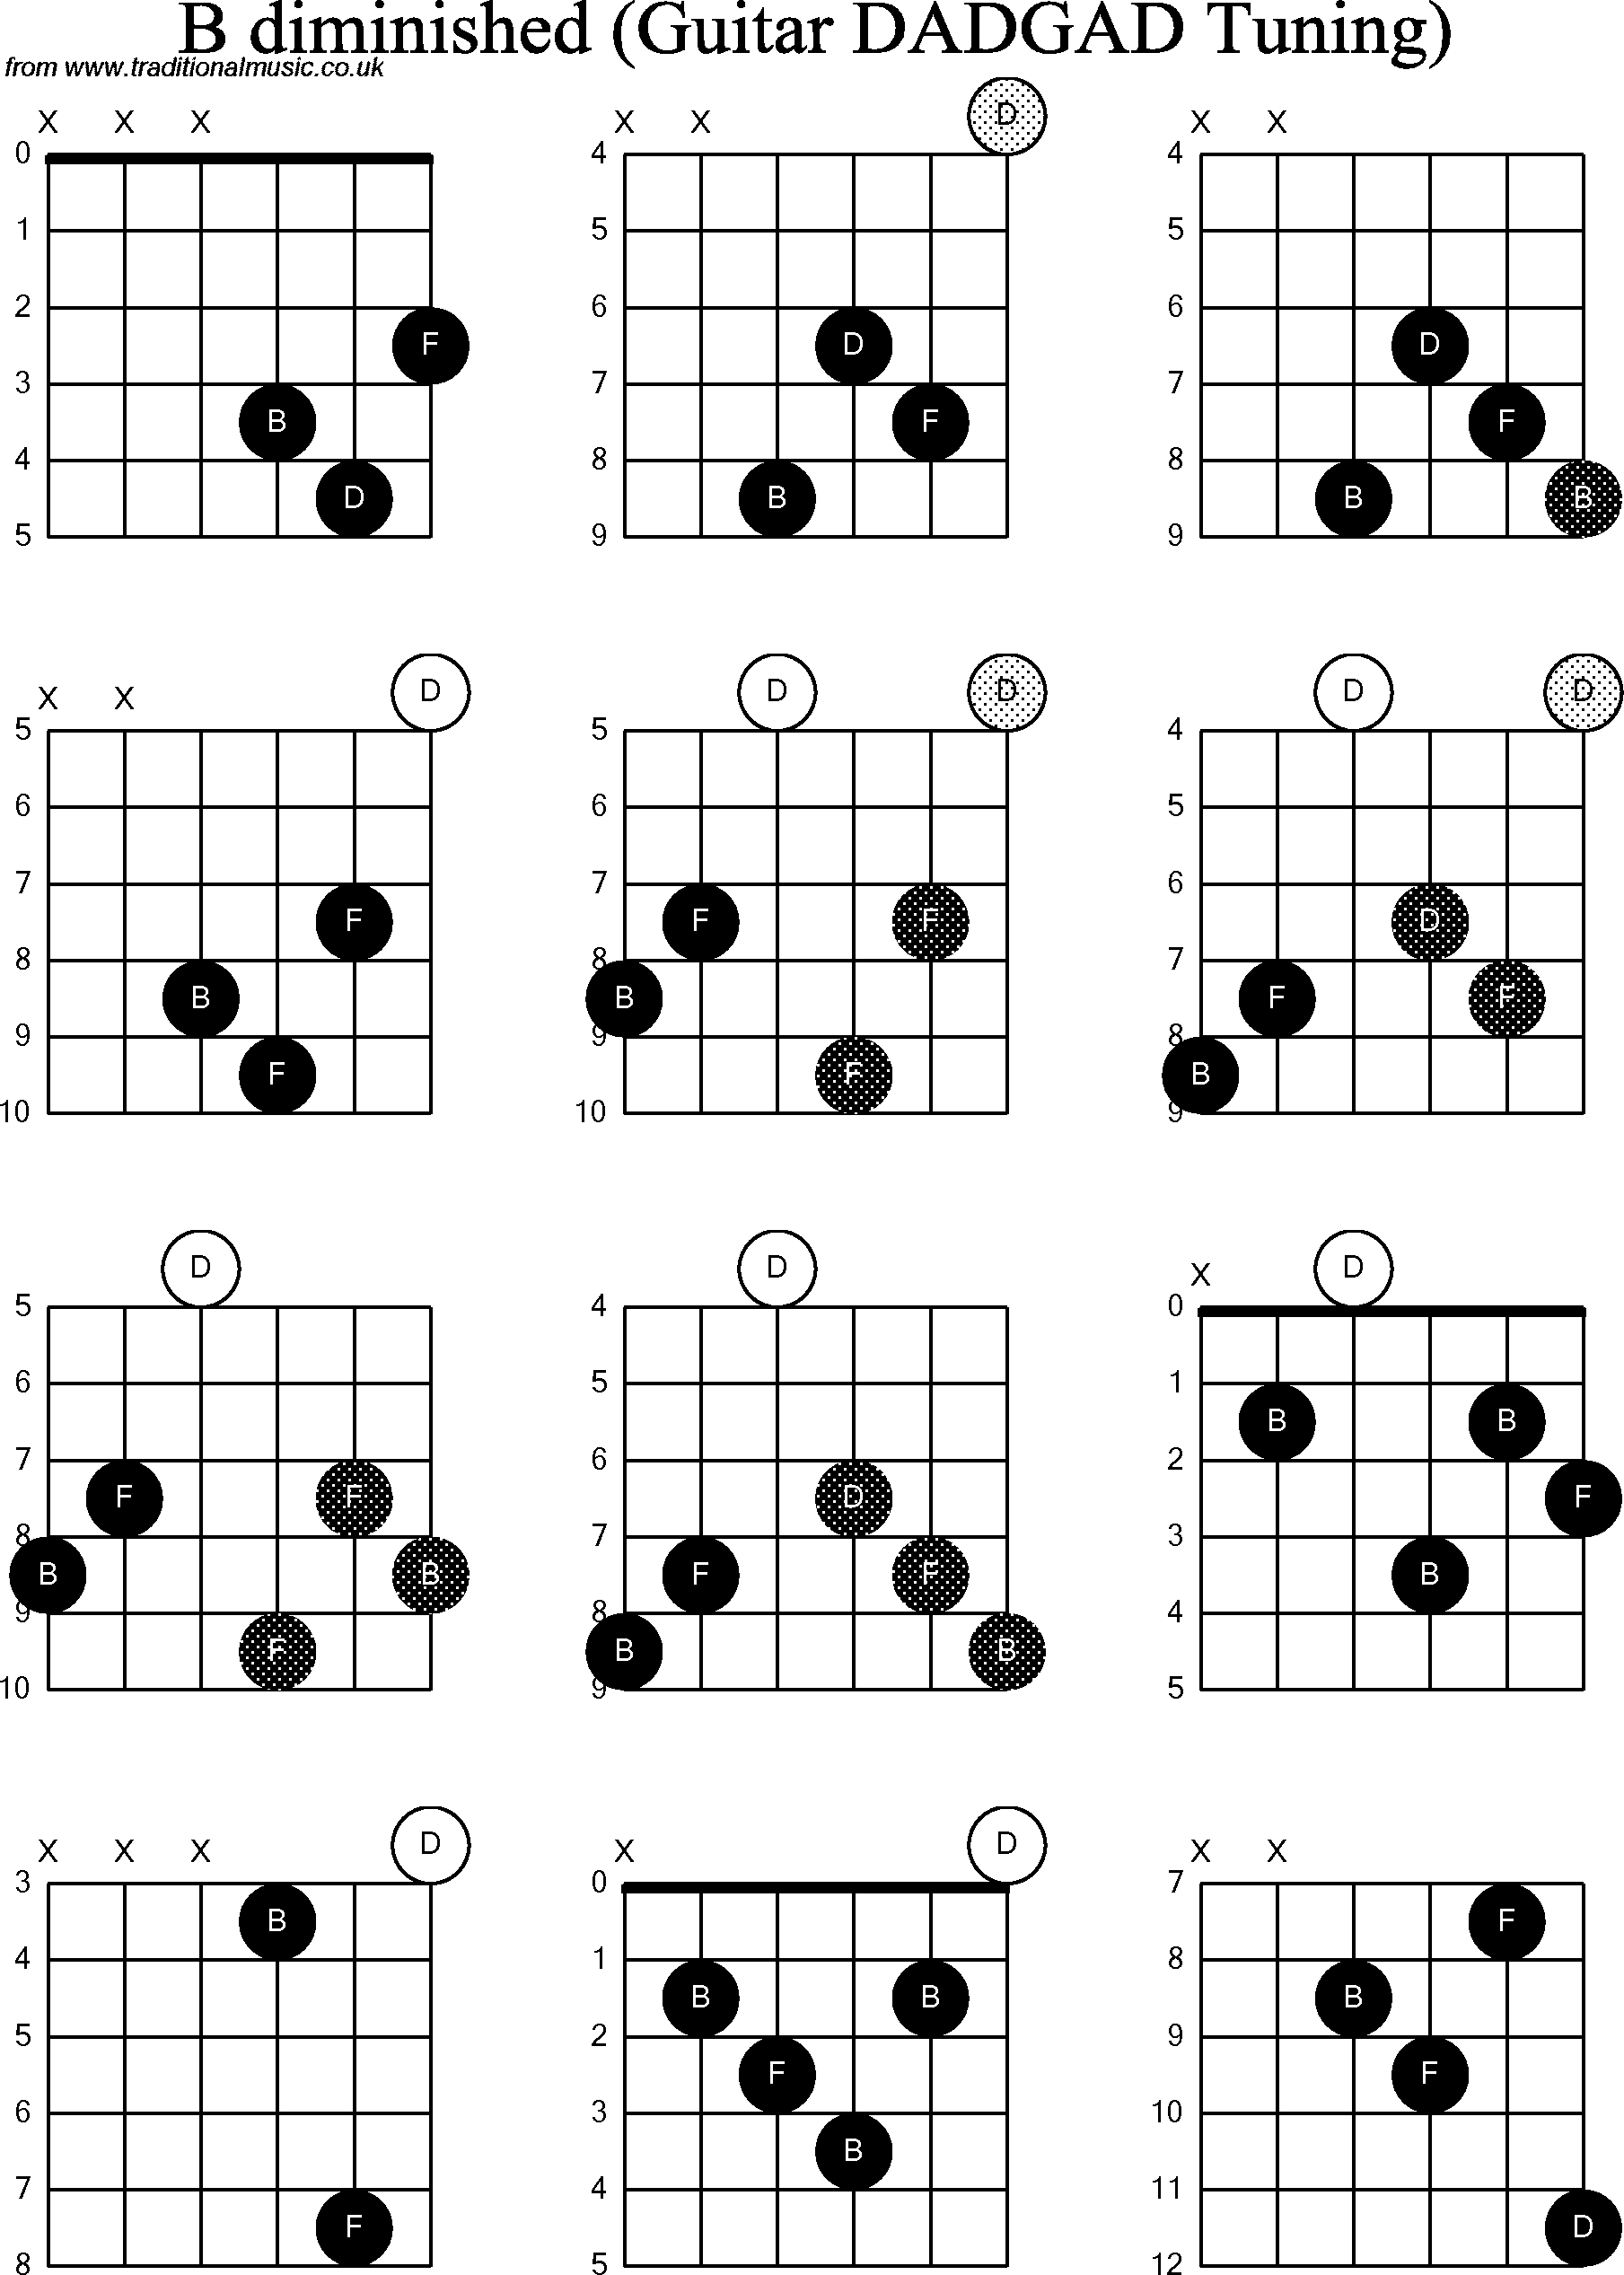 Chord Diagrams for D Modal Guitar(DADGAD), B Diminished